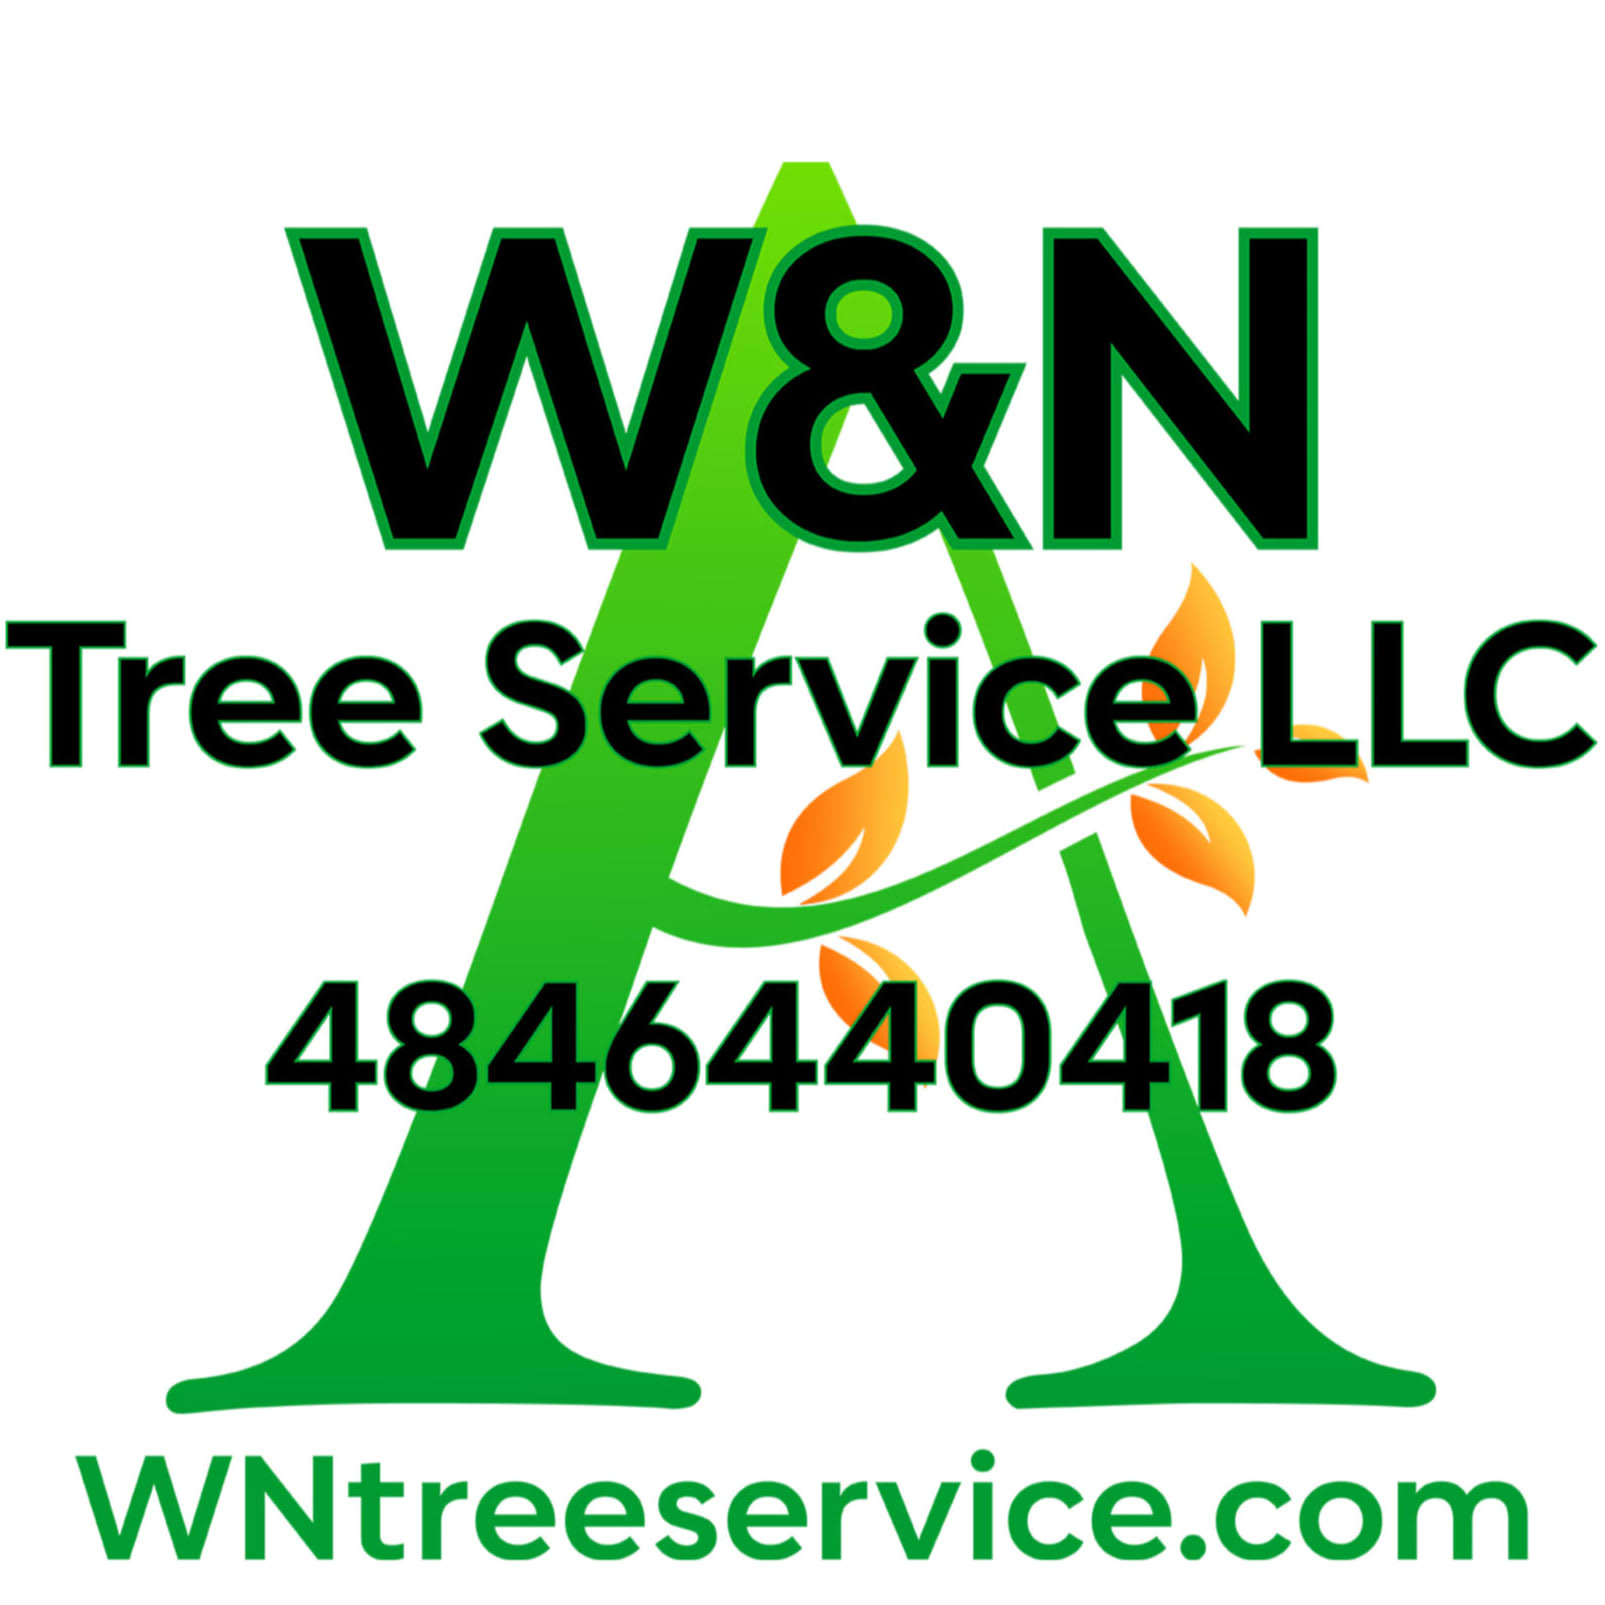 W&N tree service Llc